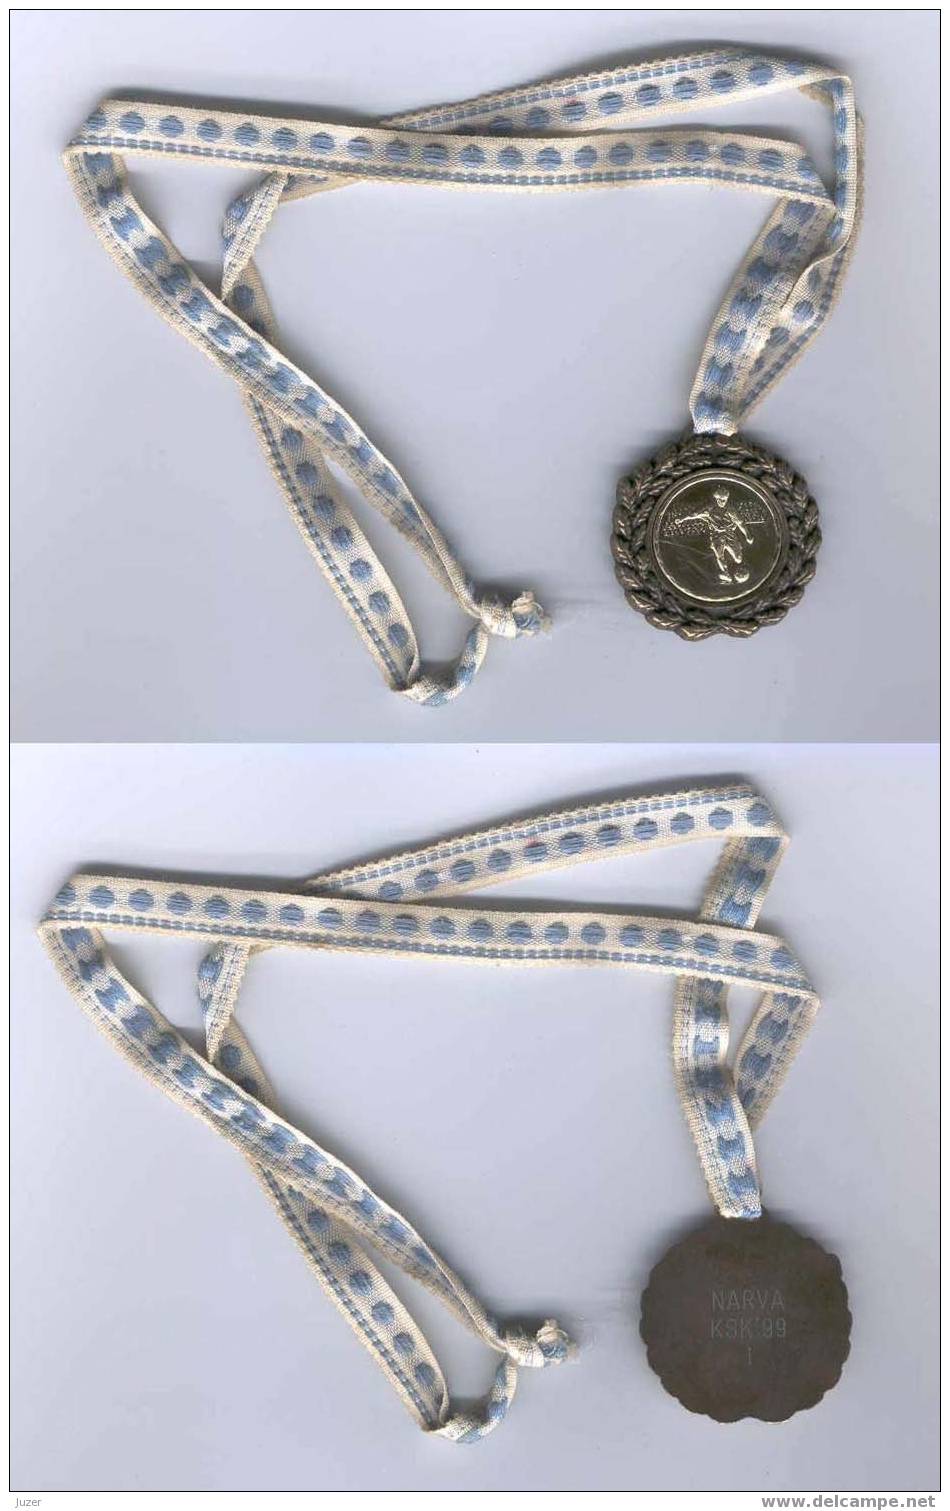 Estonia: SOCCER/FOOTBALL Medal Narva Championship 1999 - Apparel, Souvenirs & Other